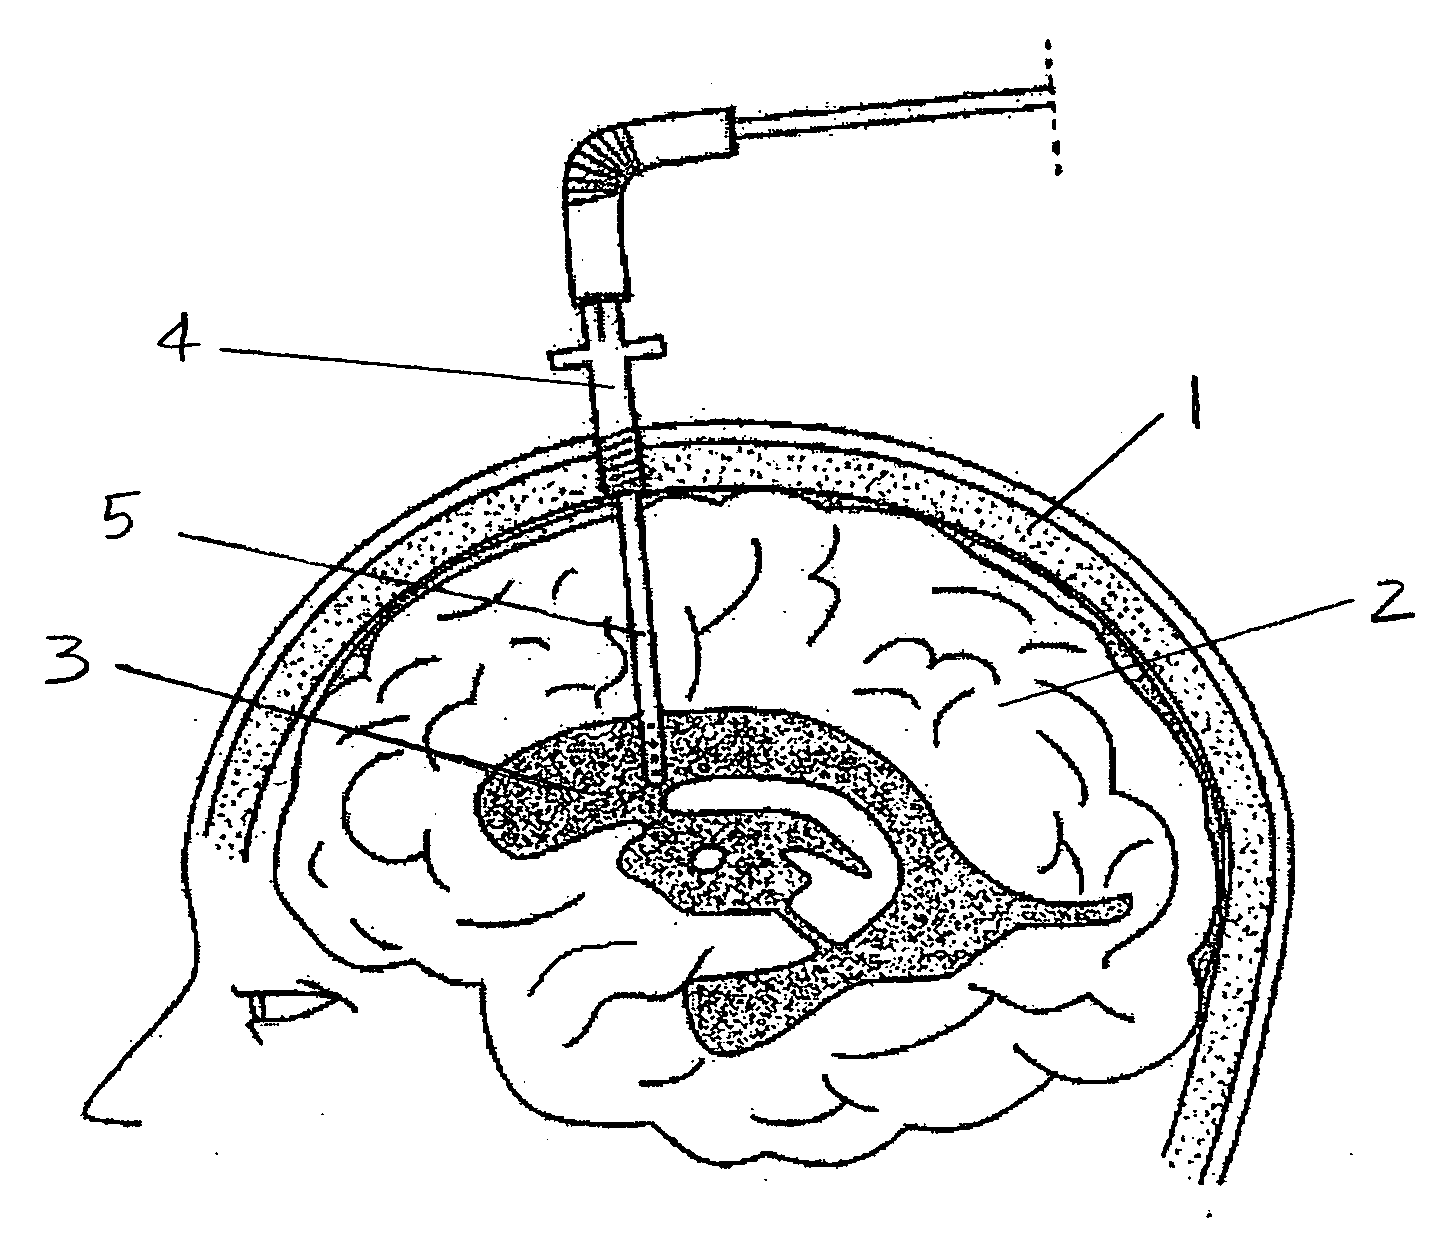 Central nervous system ultrasonic drain